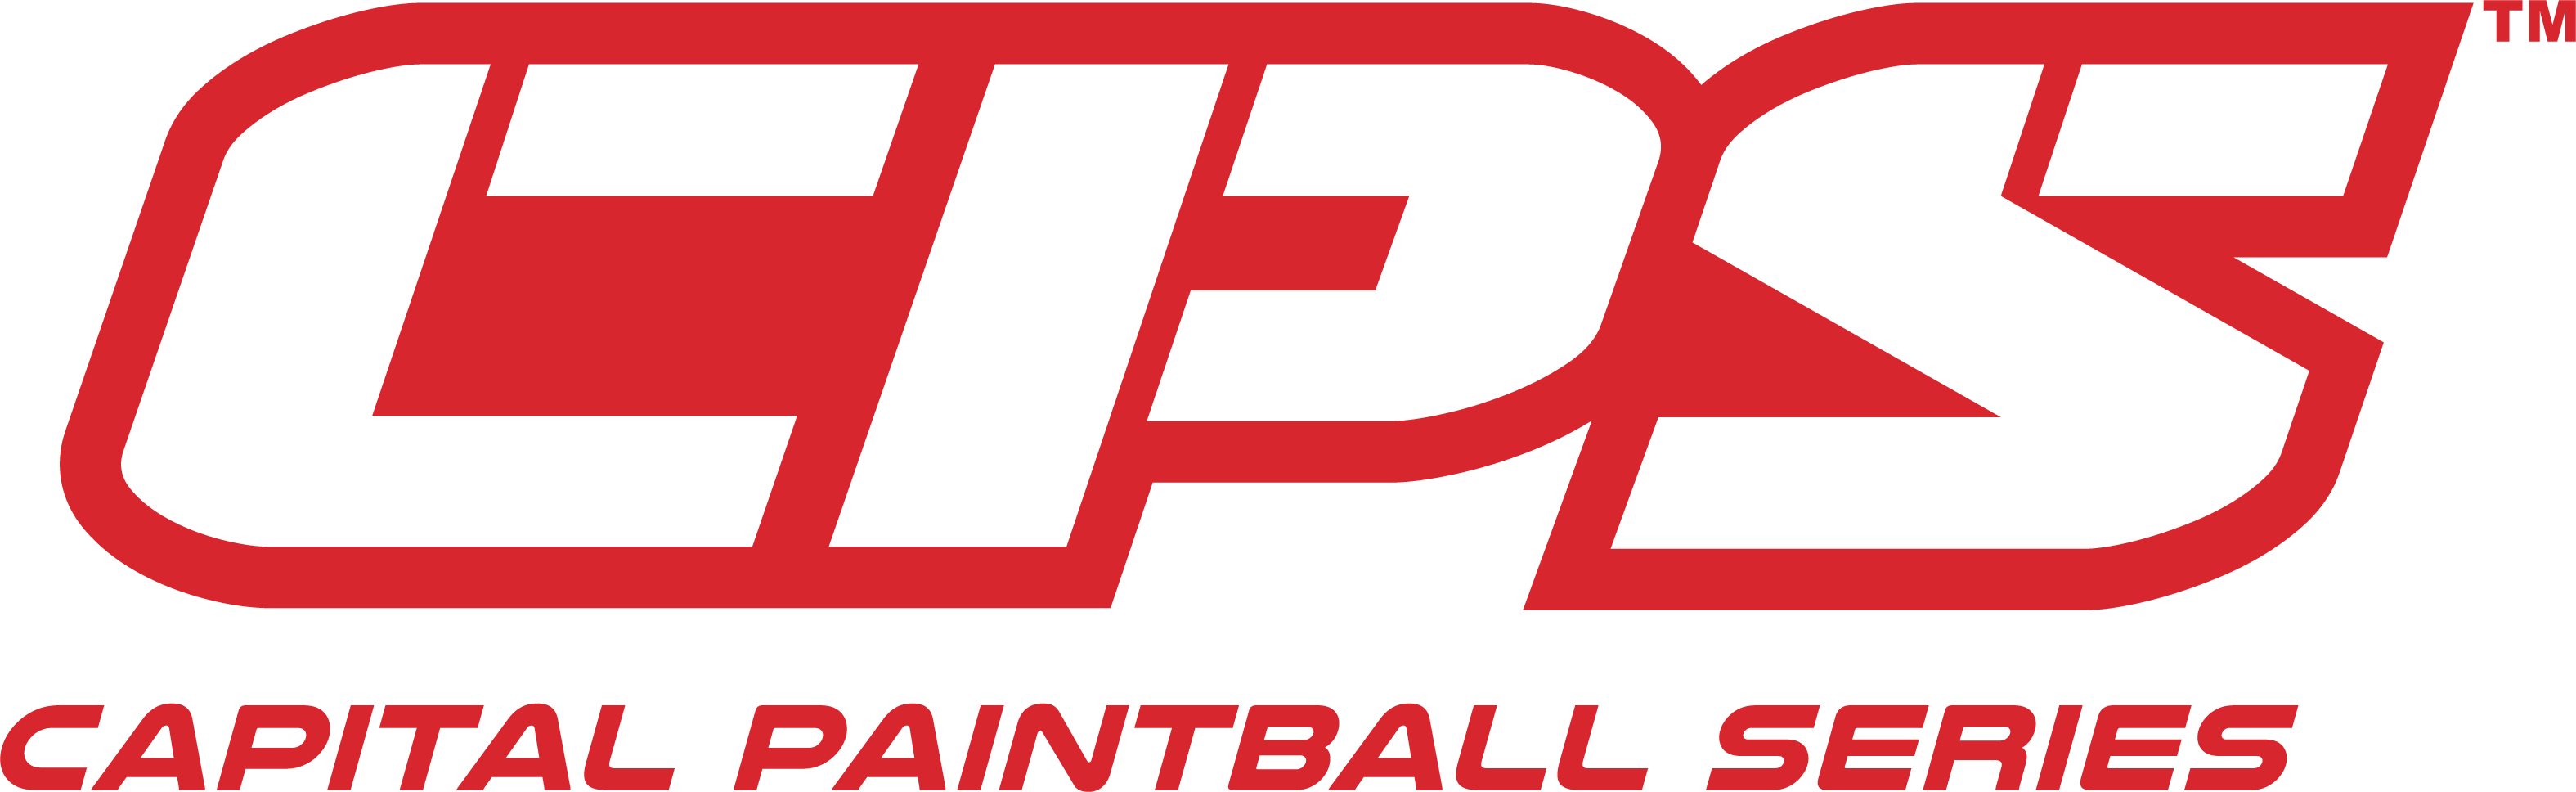 Capital Paintball Series